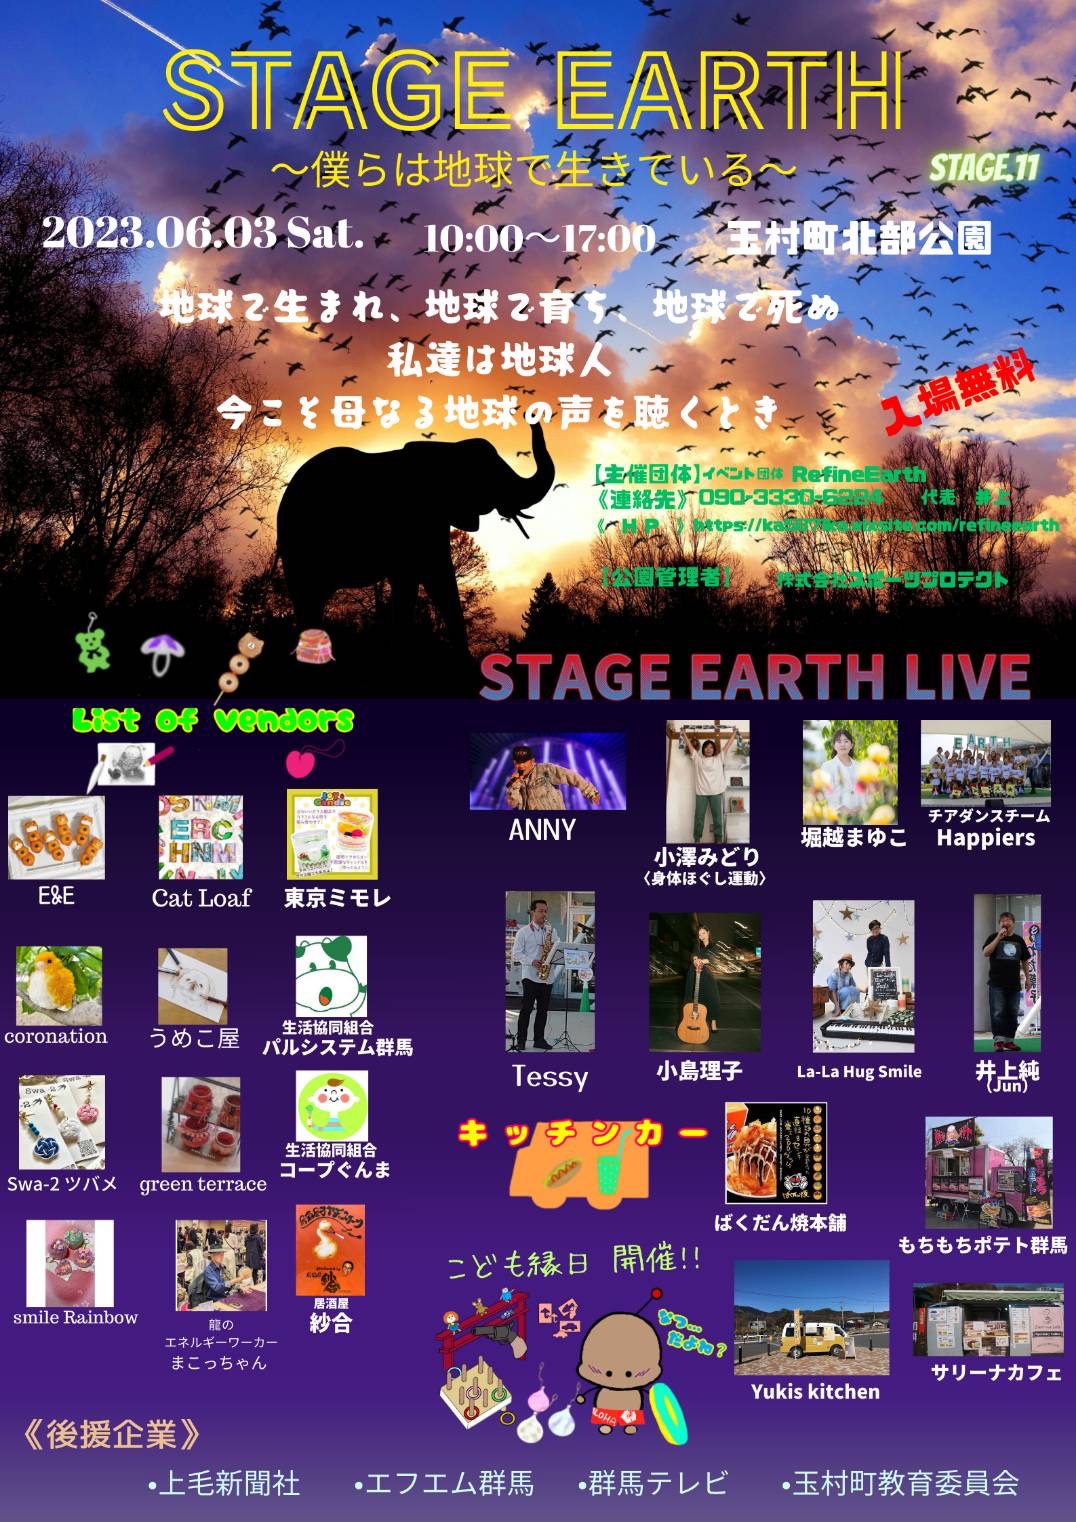 6/3土曜 Stage Earth玉村町北部運動公園ANNY LIVE出演